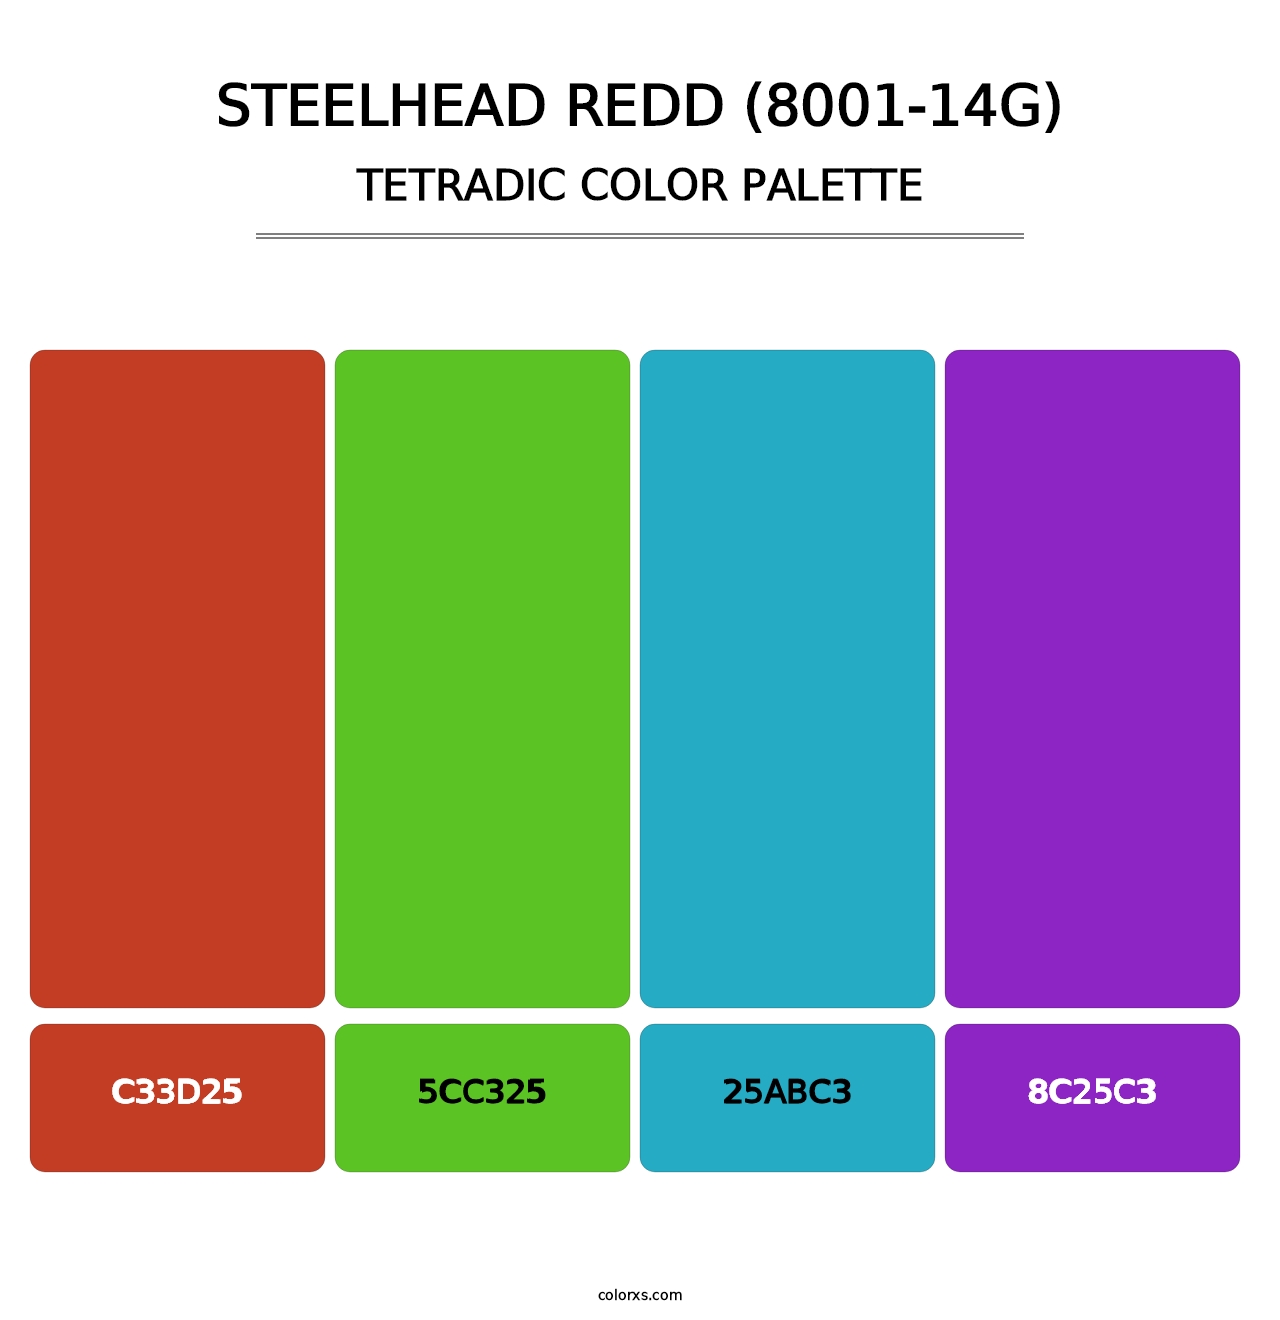 Steelhead Redd (8001-14G) - Tetradic Color Palette